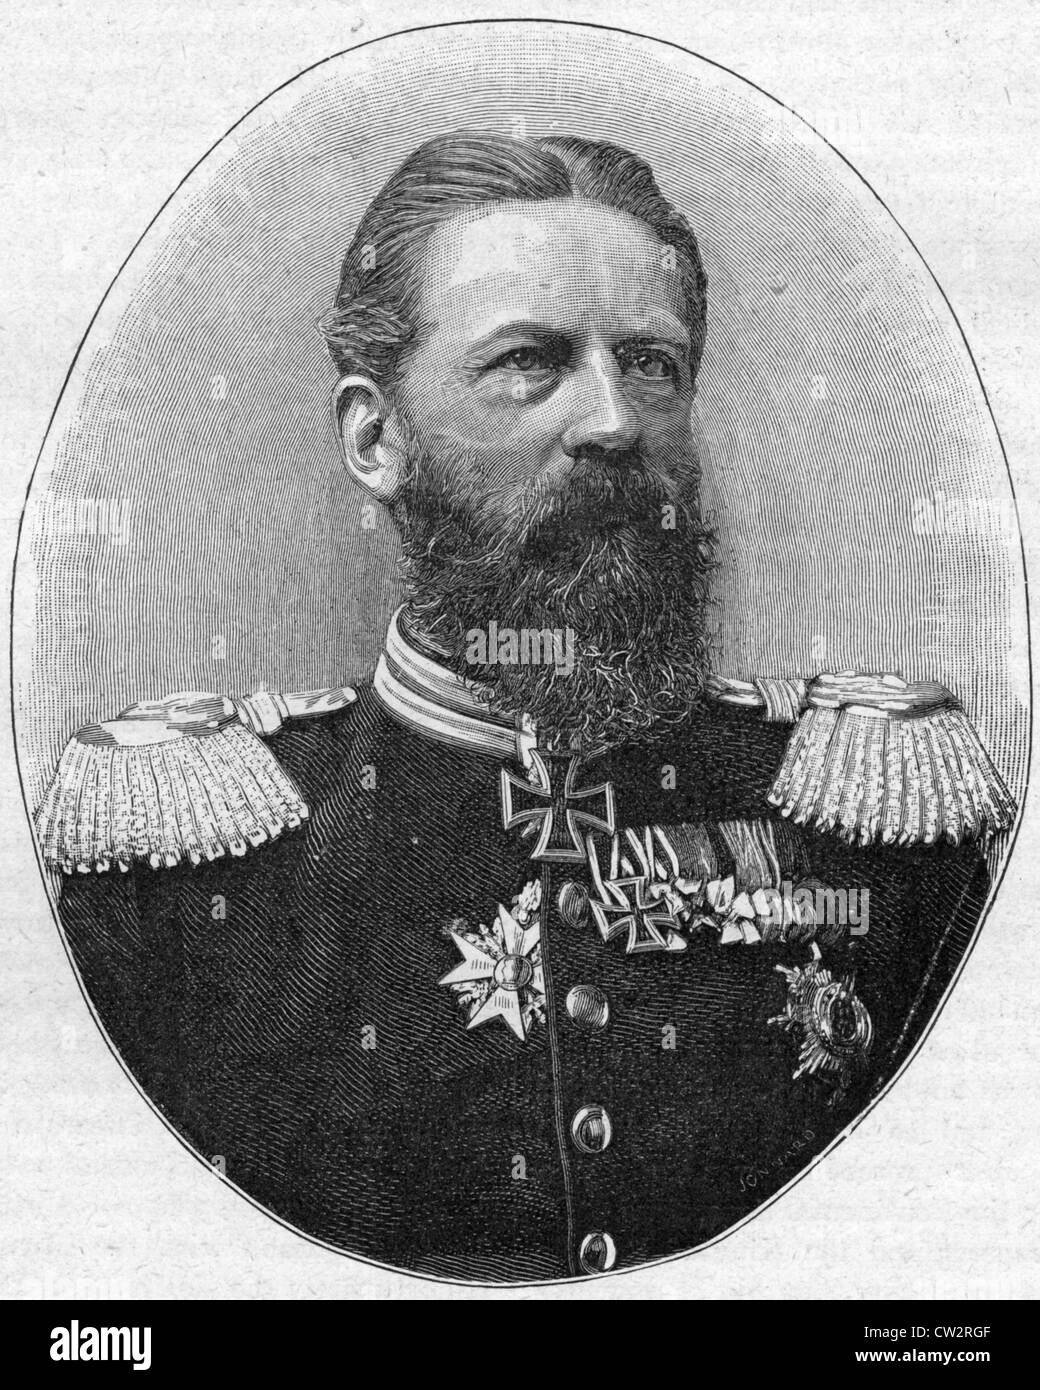 L'empereur allemand Frédéric III (1831-1888) Banque D'Images